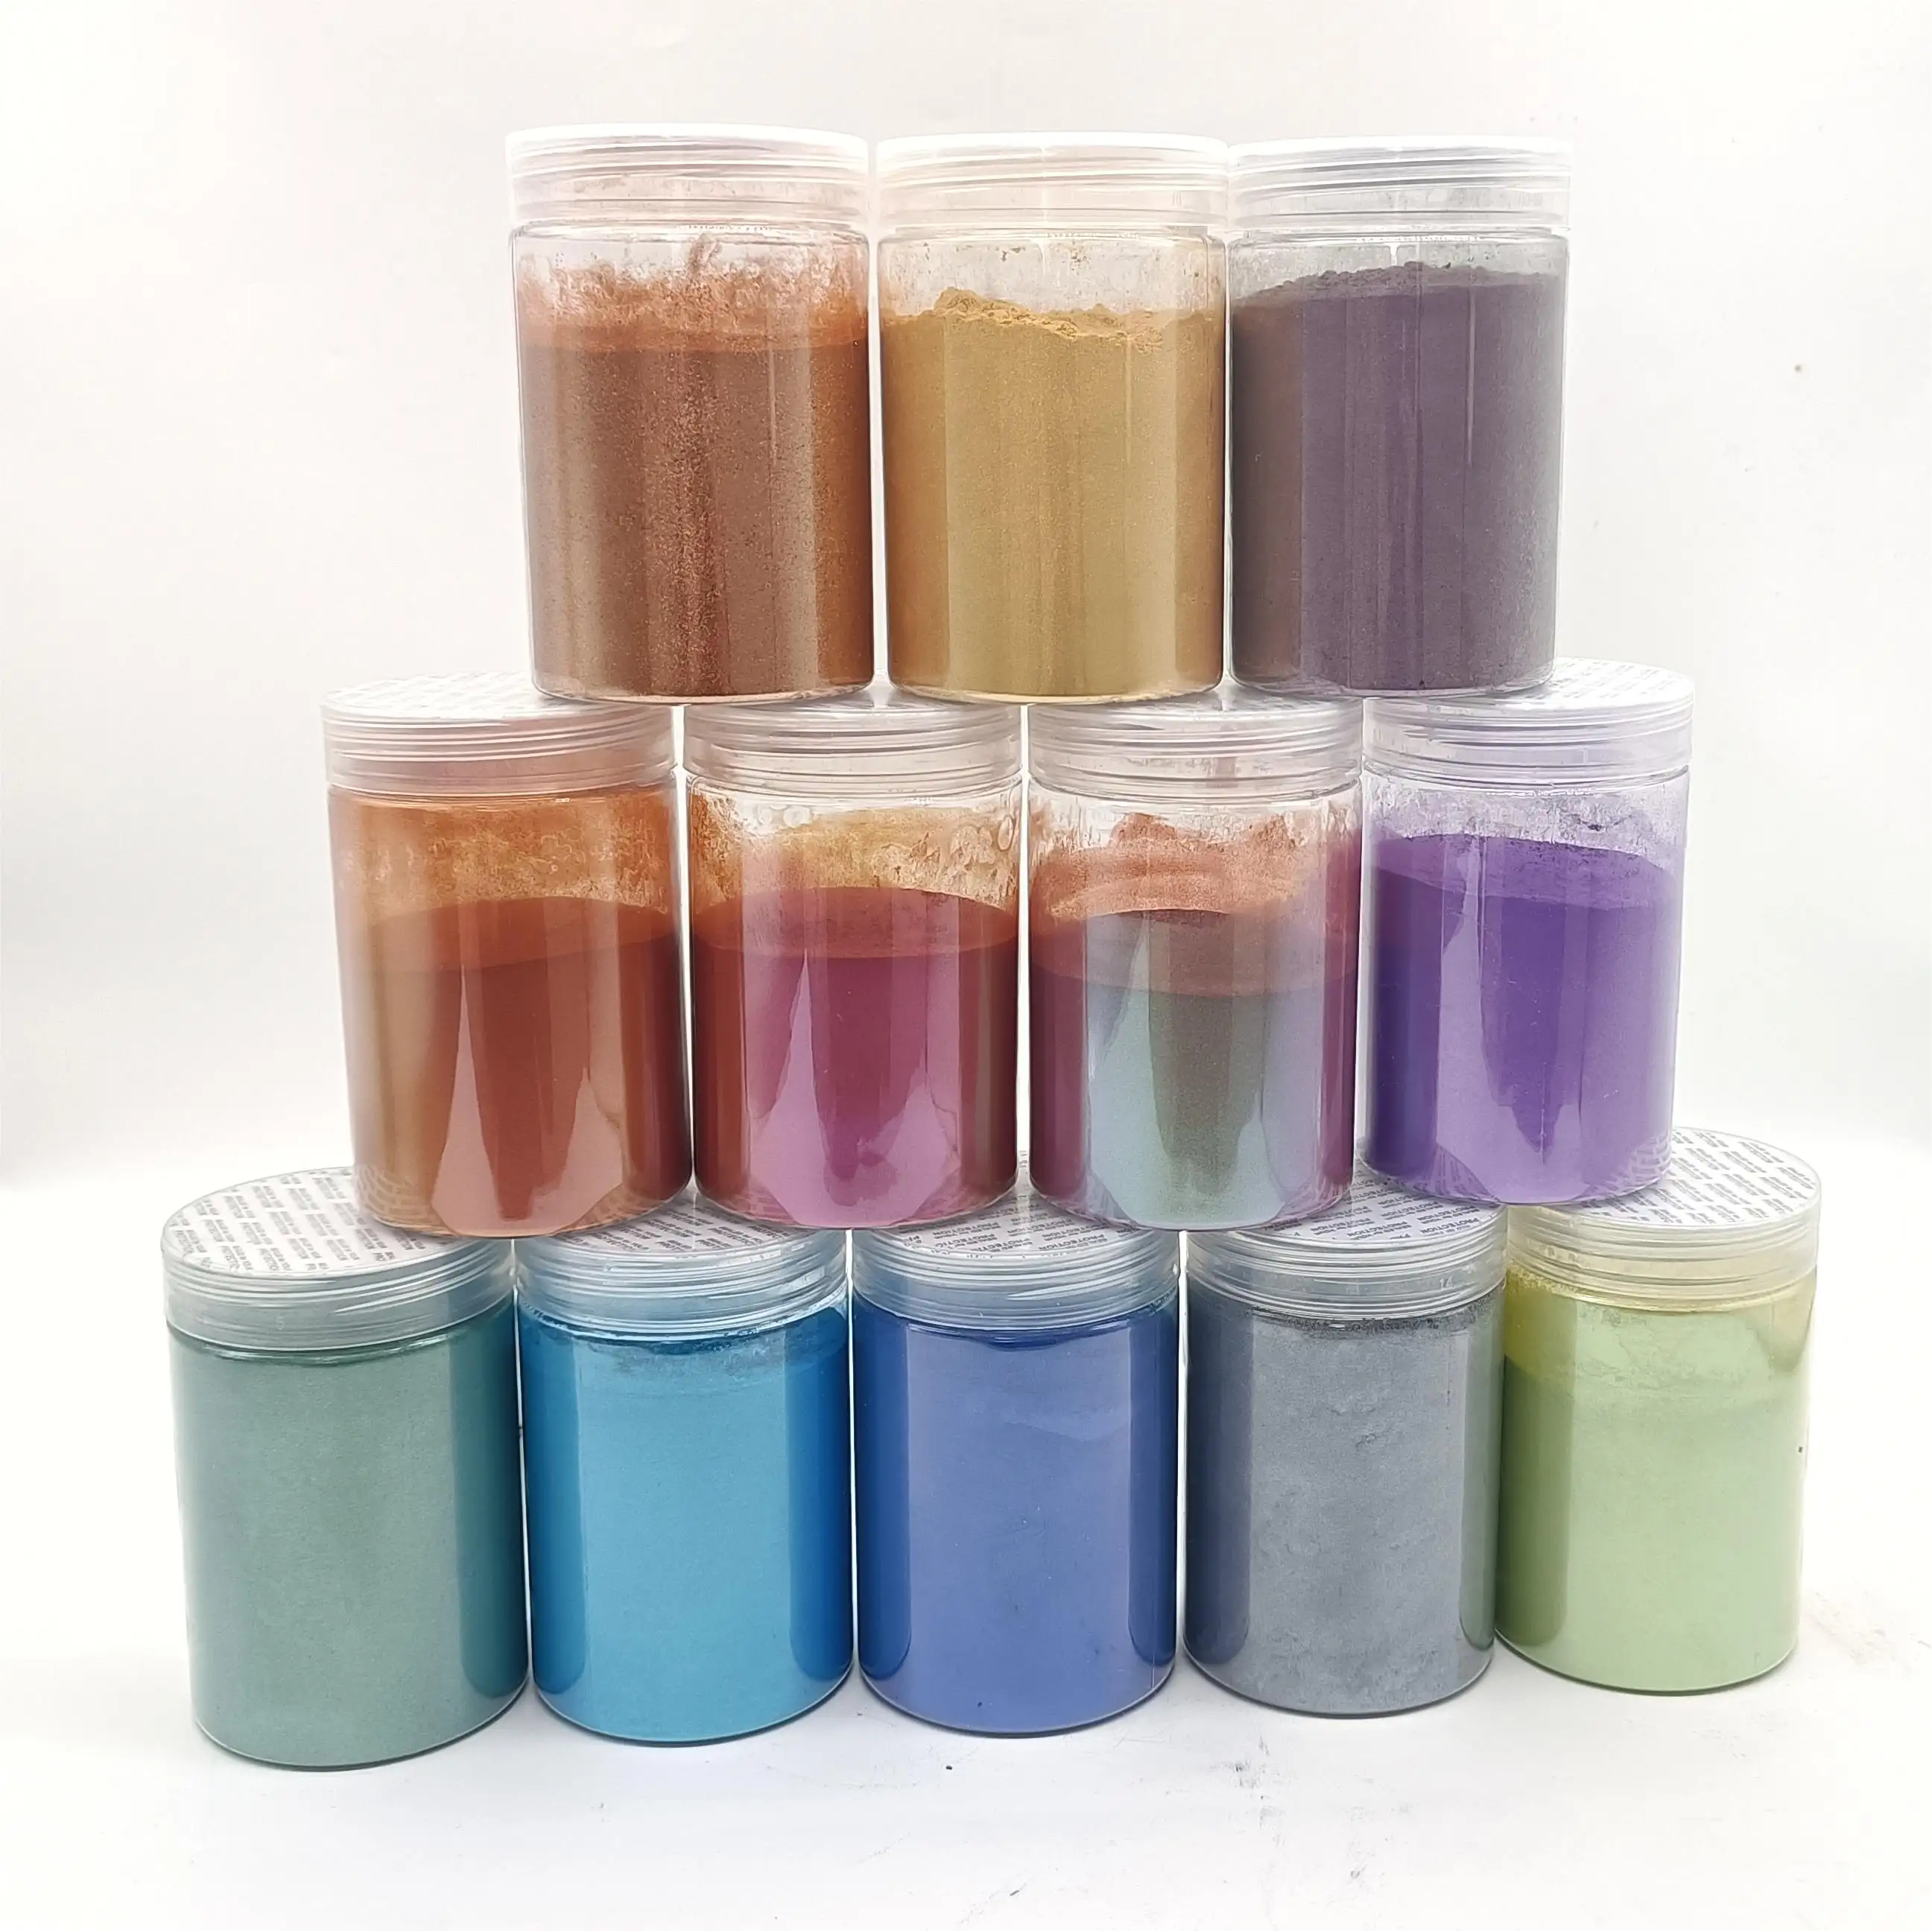 הנמכר ביותר צבע פנינה נציץ אבקת צבע Pearlescent פיגמנט duochrome פיגמנט